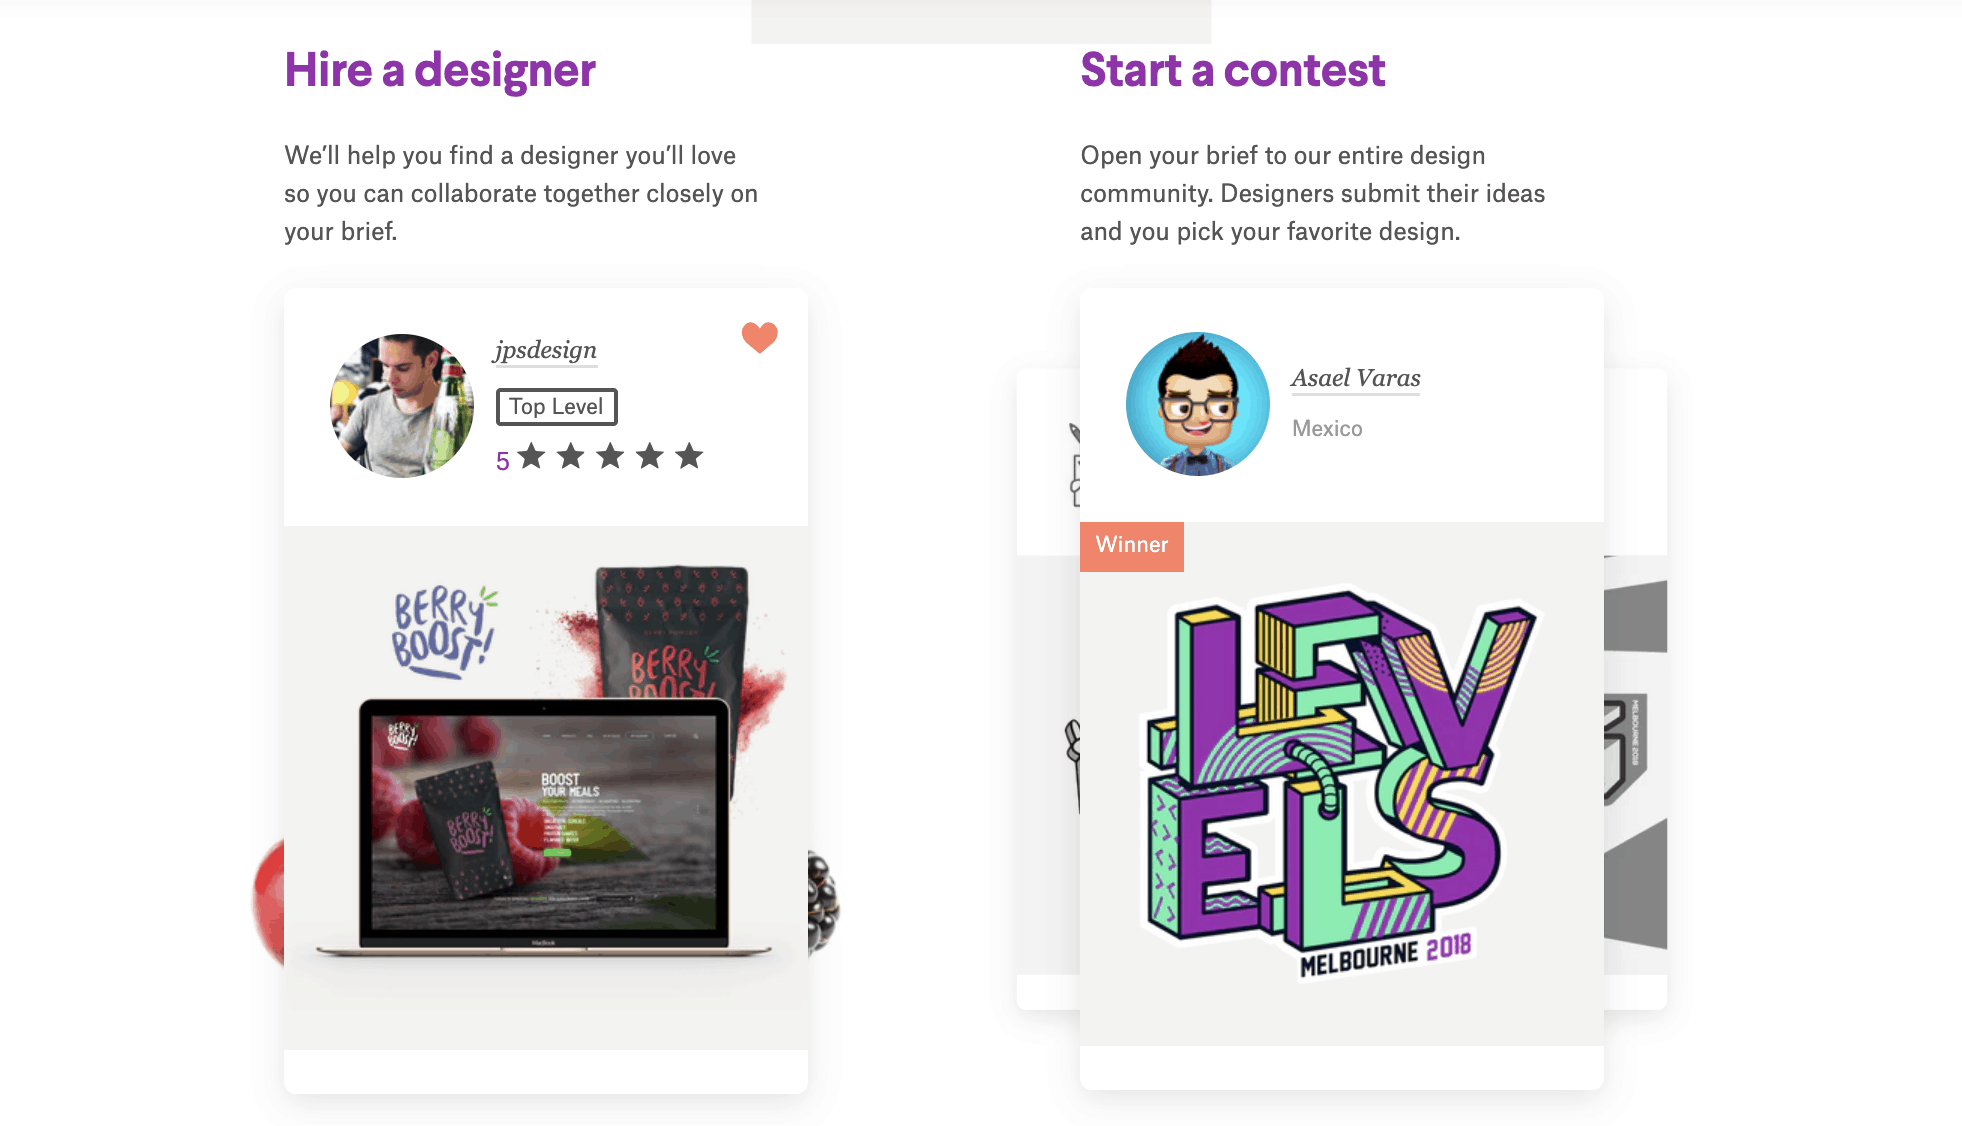 99designs screenshot - hire a designer or start a contest